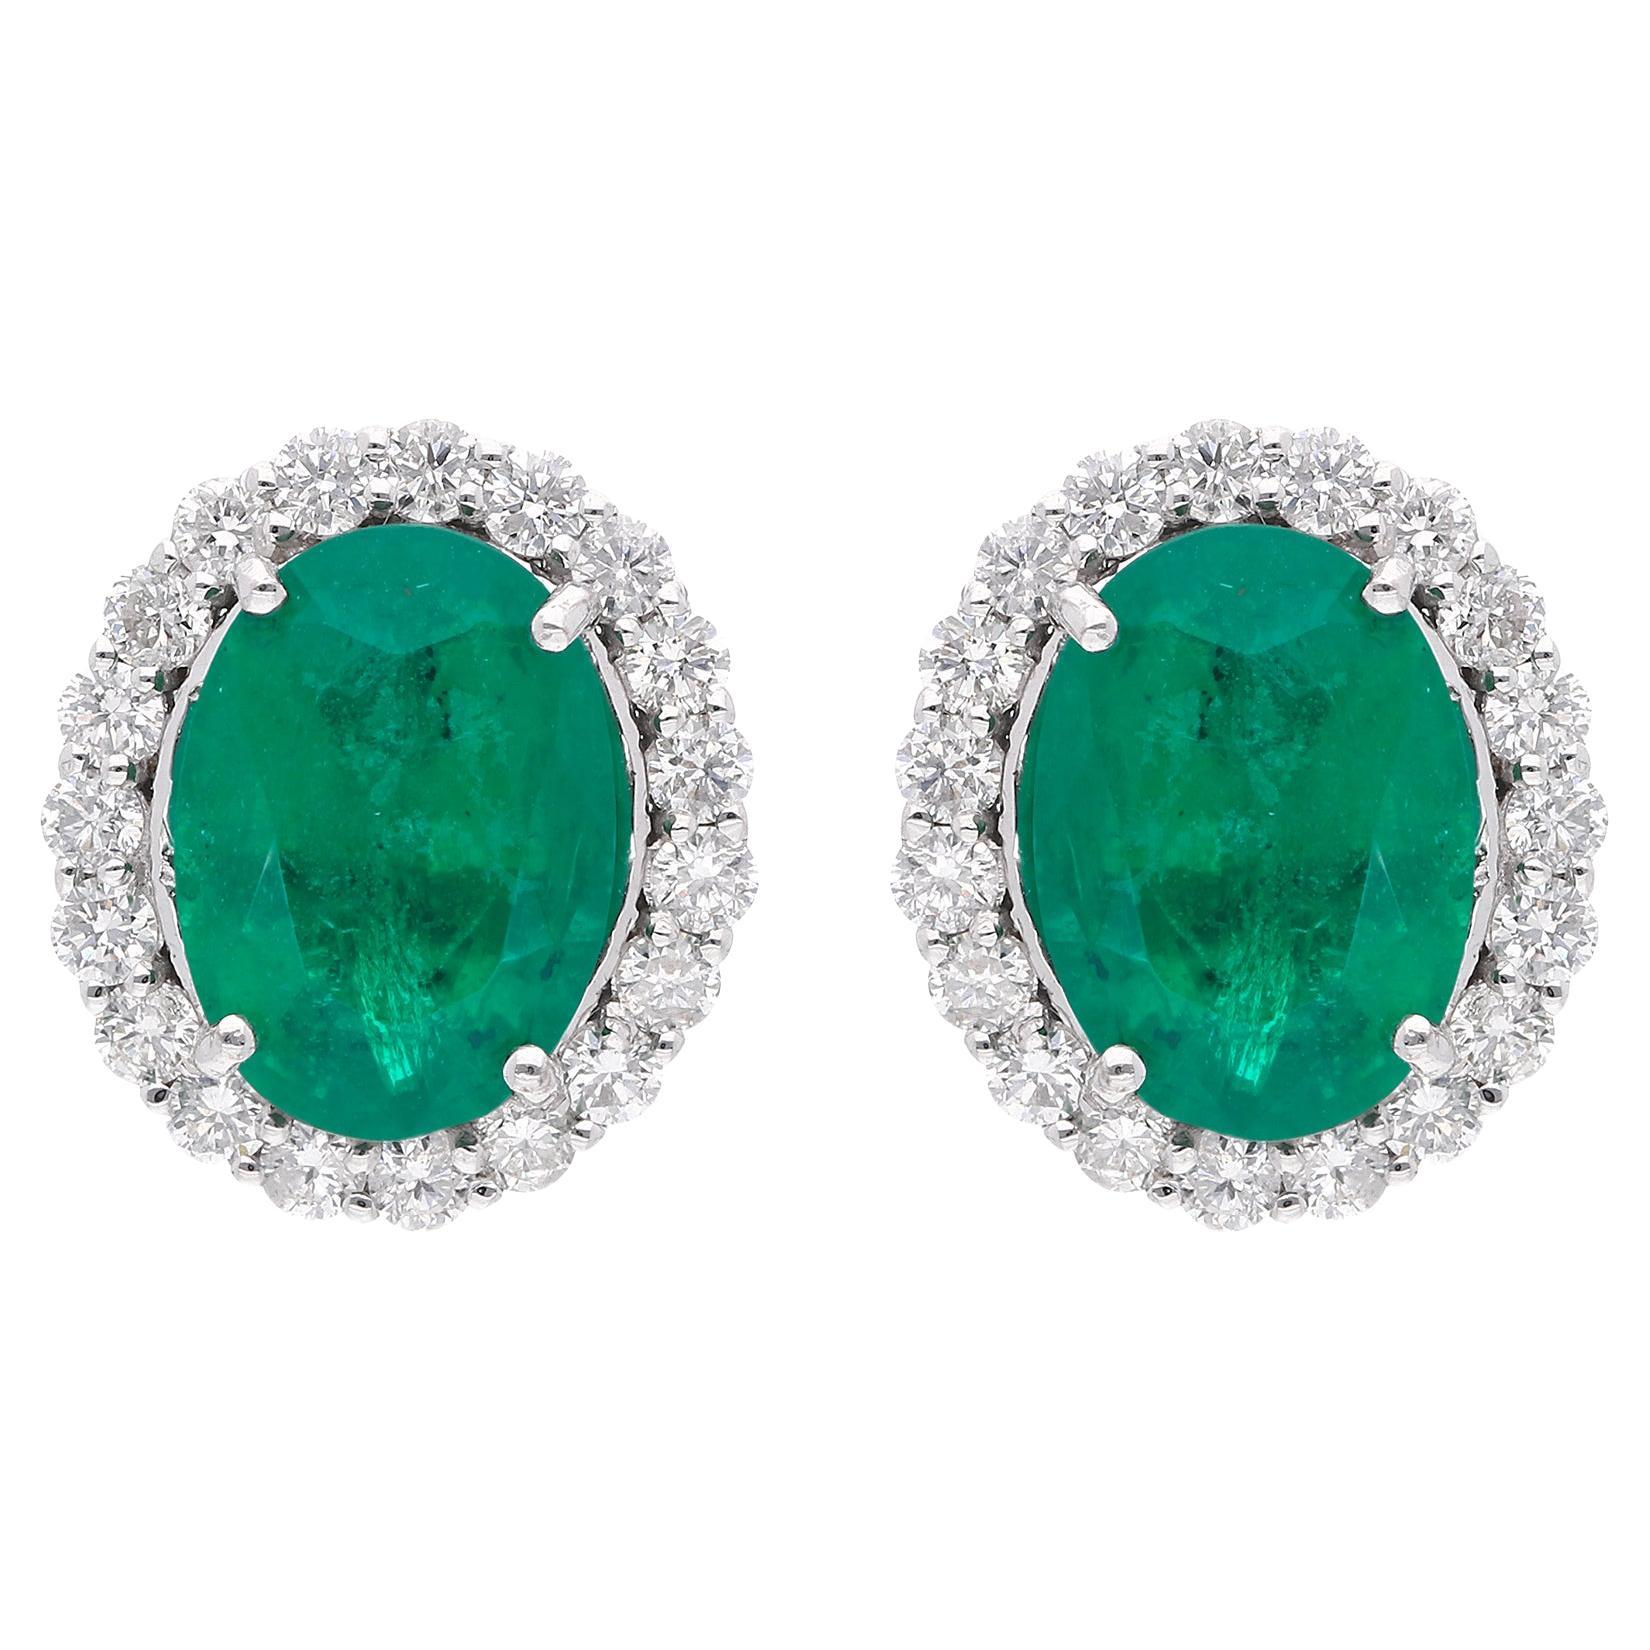 Oval Natural Emerald Gemstone Stud Earrings Diamond 18 Karat White Gold Jewelry